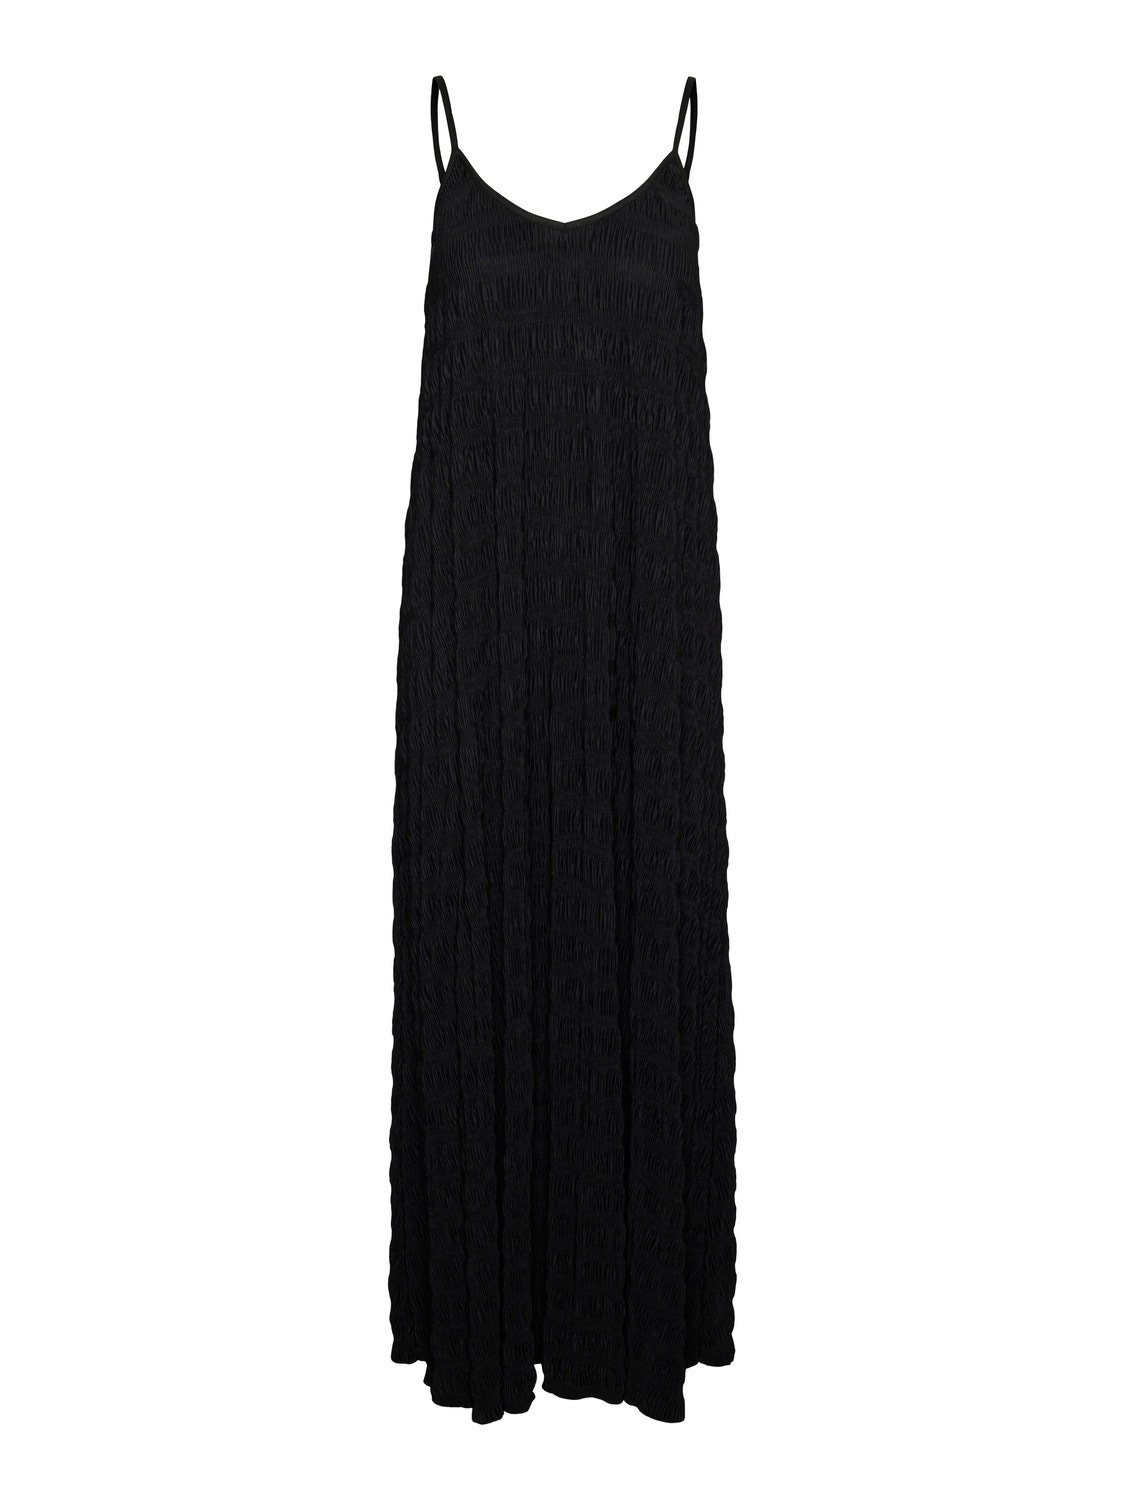 Vero Moda VMREE Long dress -Black - 10310636